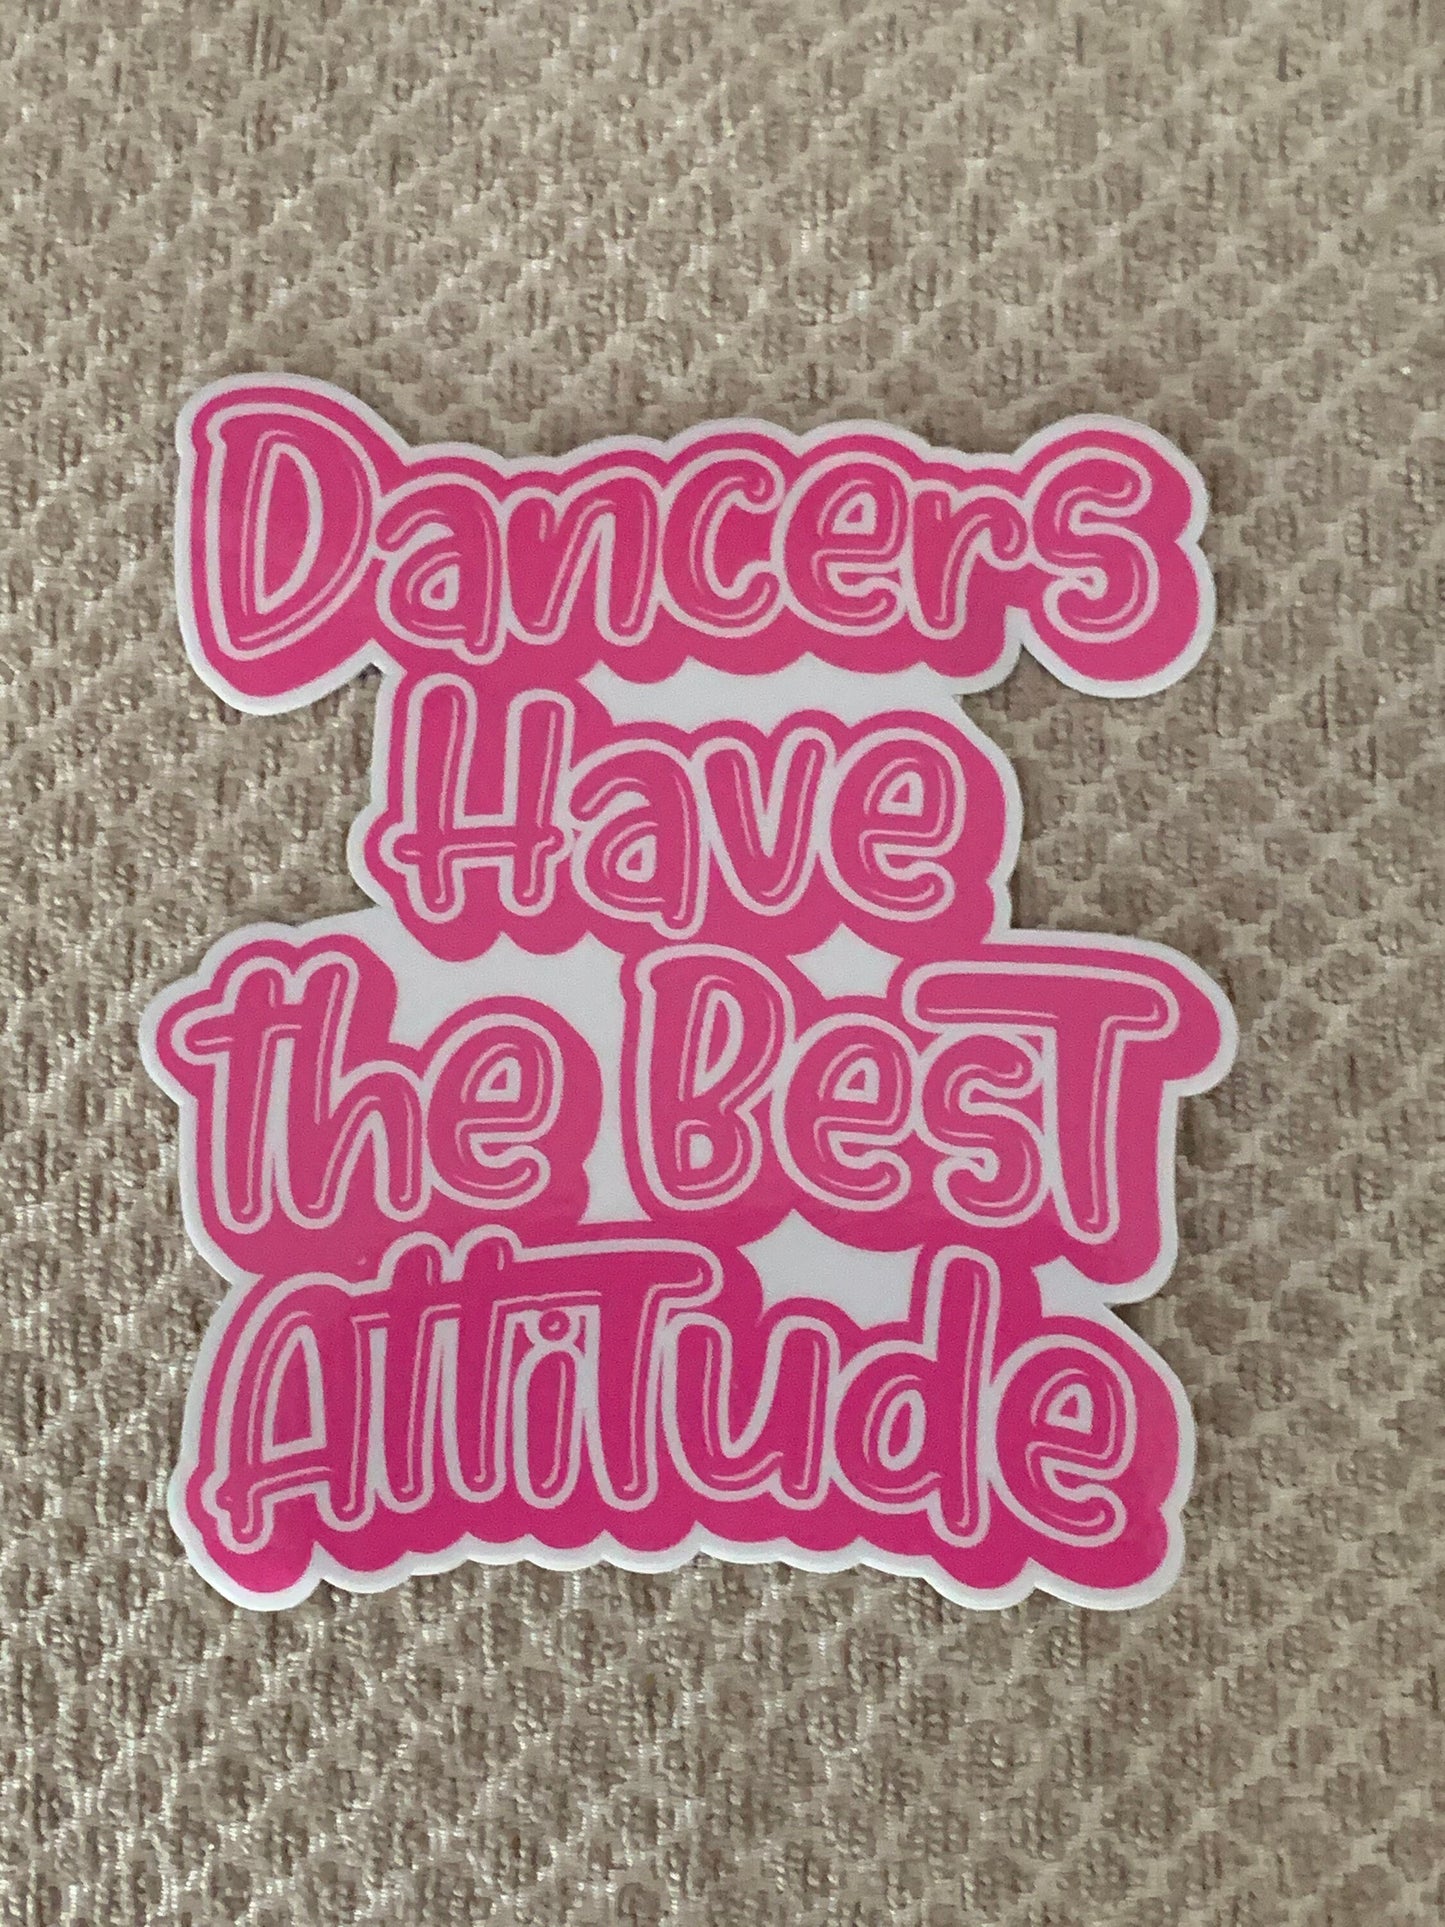 Dancers Have the Best Attitude PINK Vinyl Sticker, Vinyl Decal, Laptop Sticker, Dance Sticker, Gifts For Dancers,